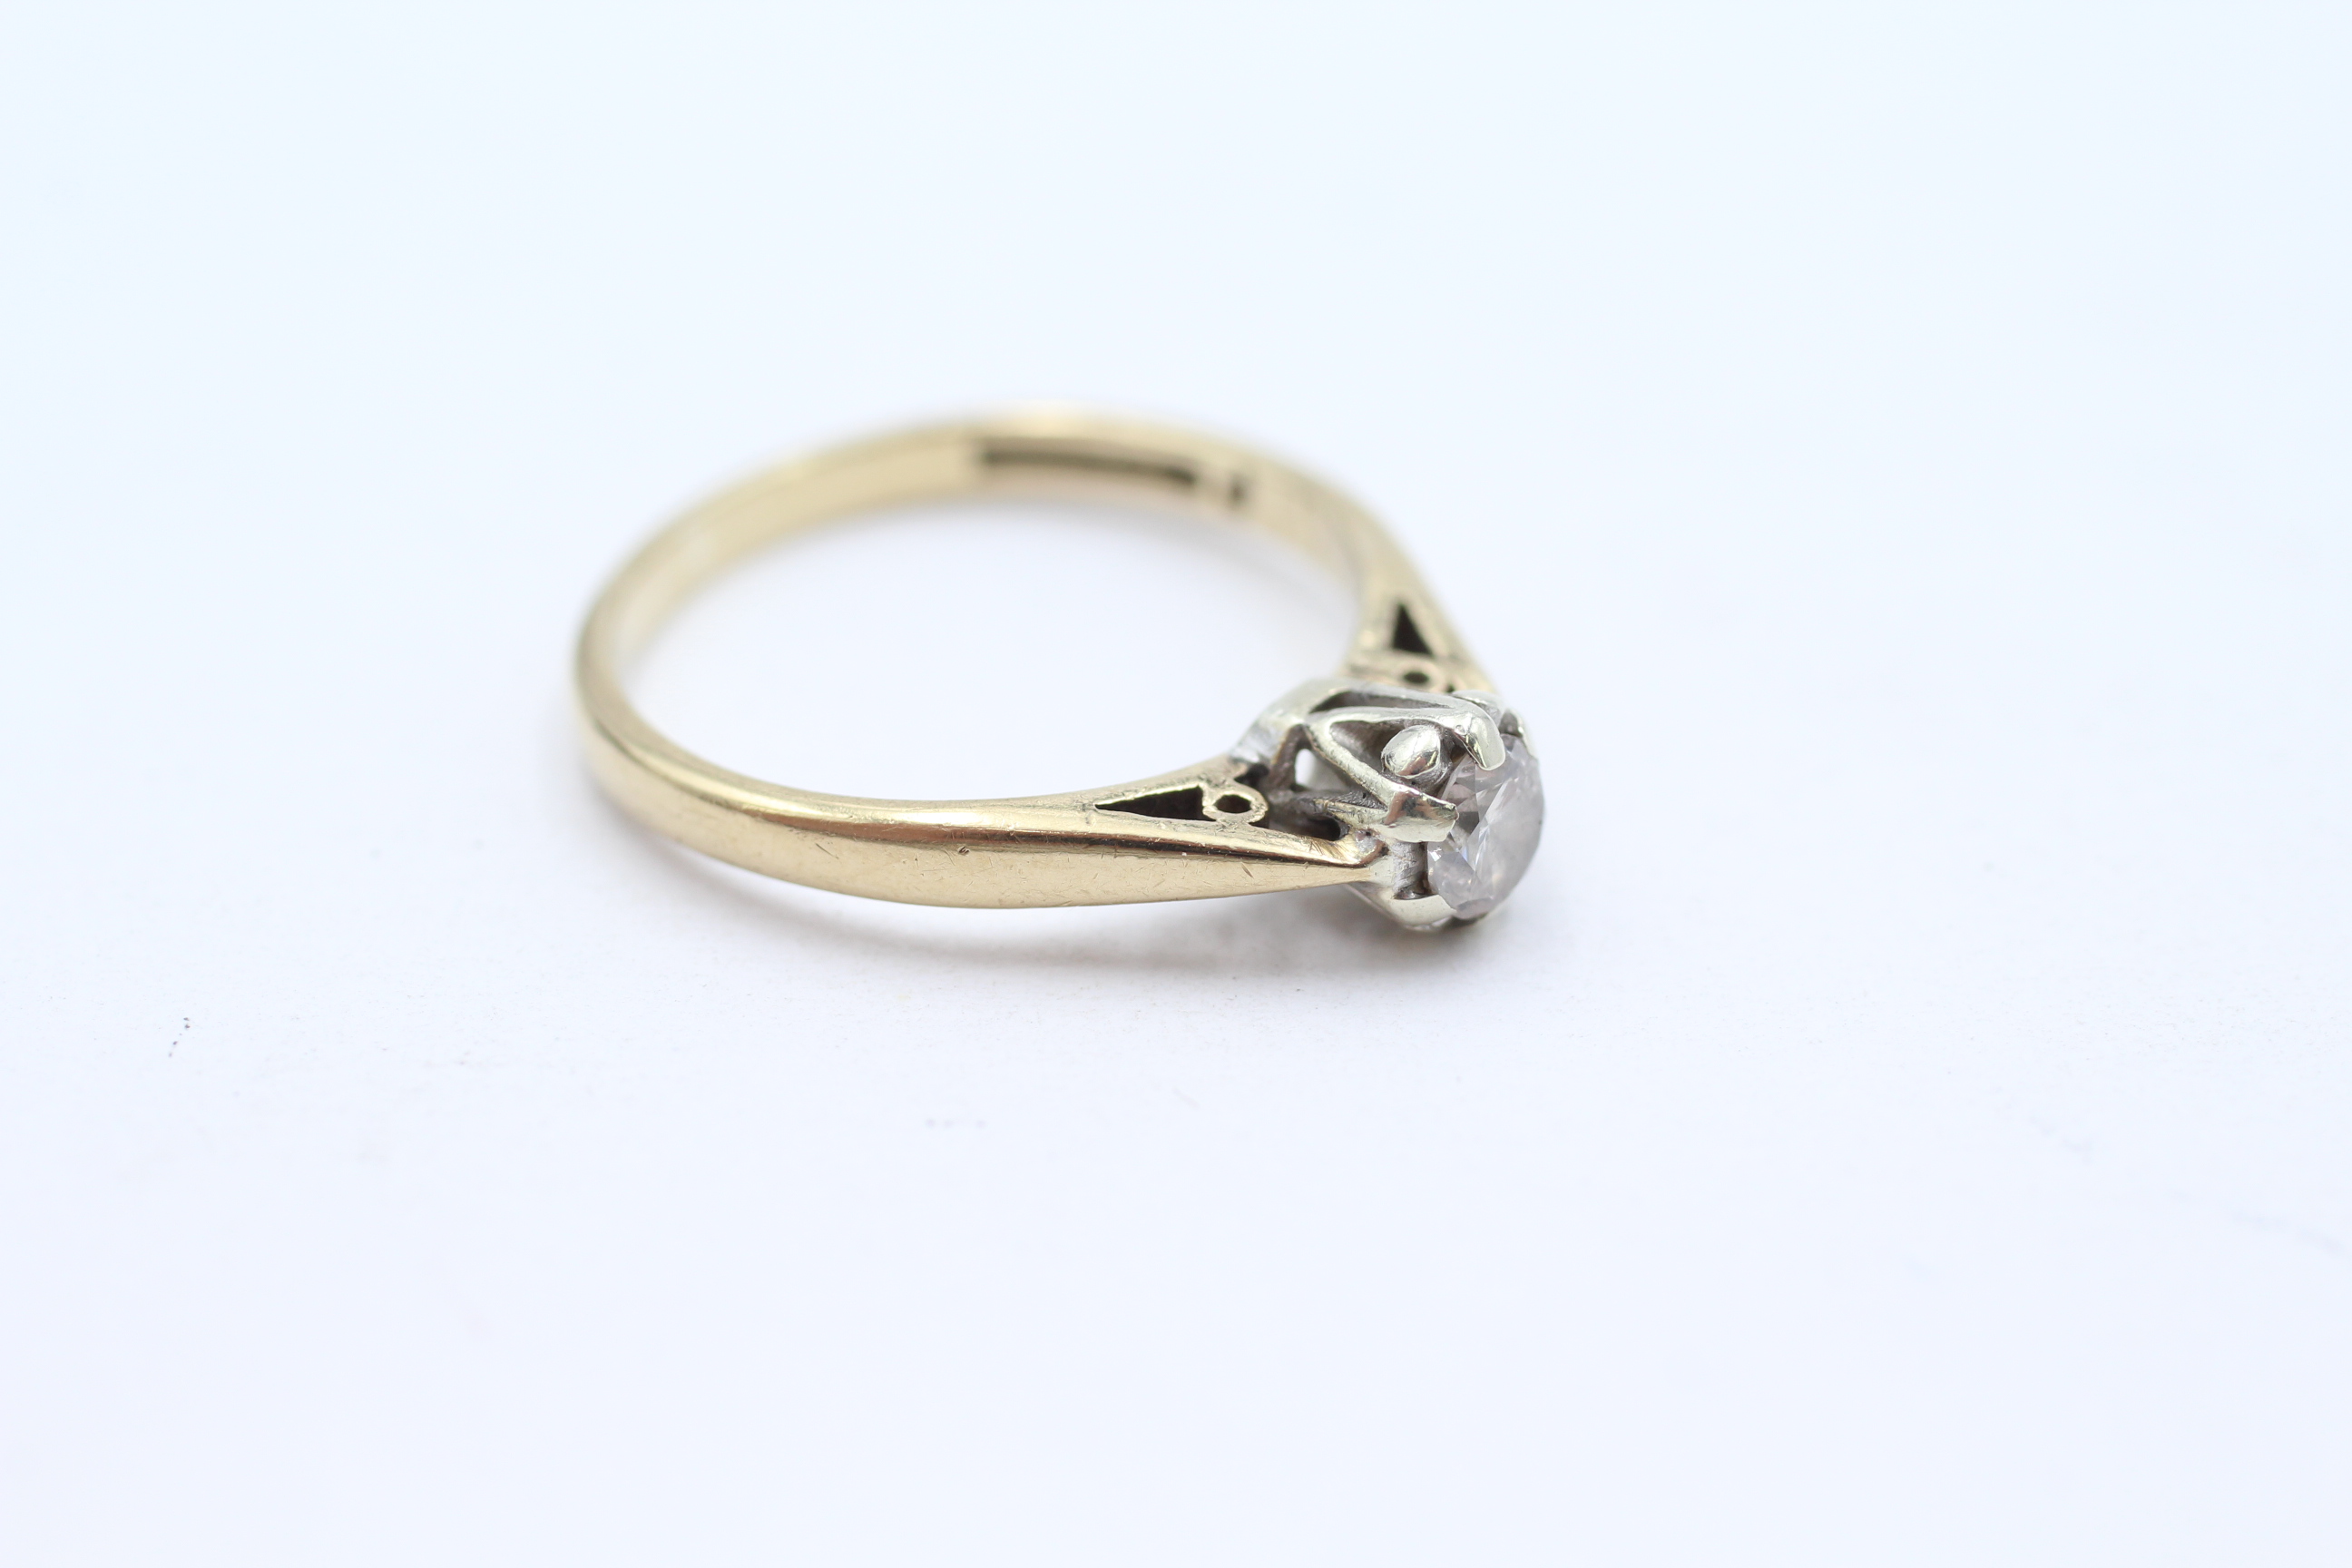 9ct gold round brilliant diamond single stone ring Size M - 2 g - Image 2 of 4